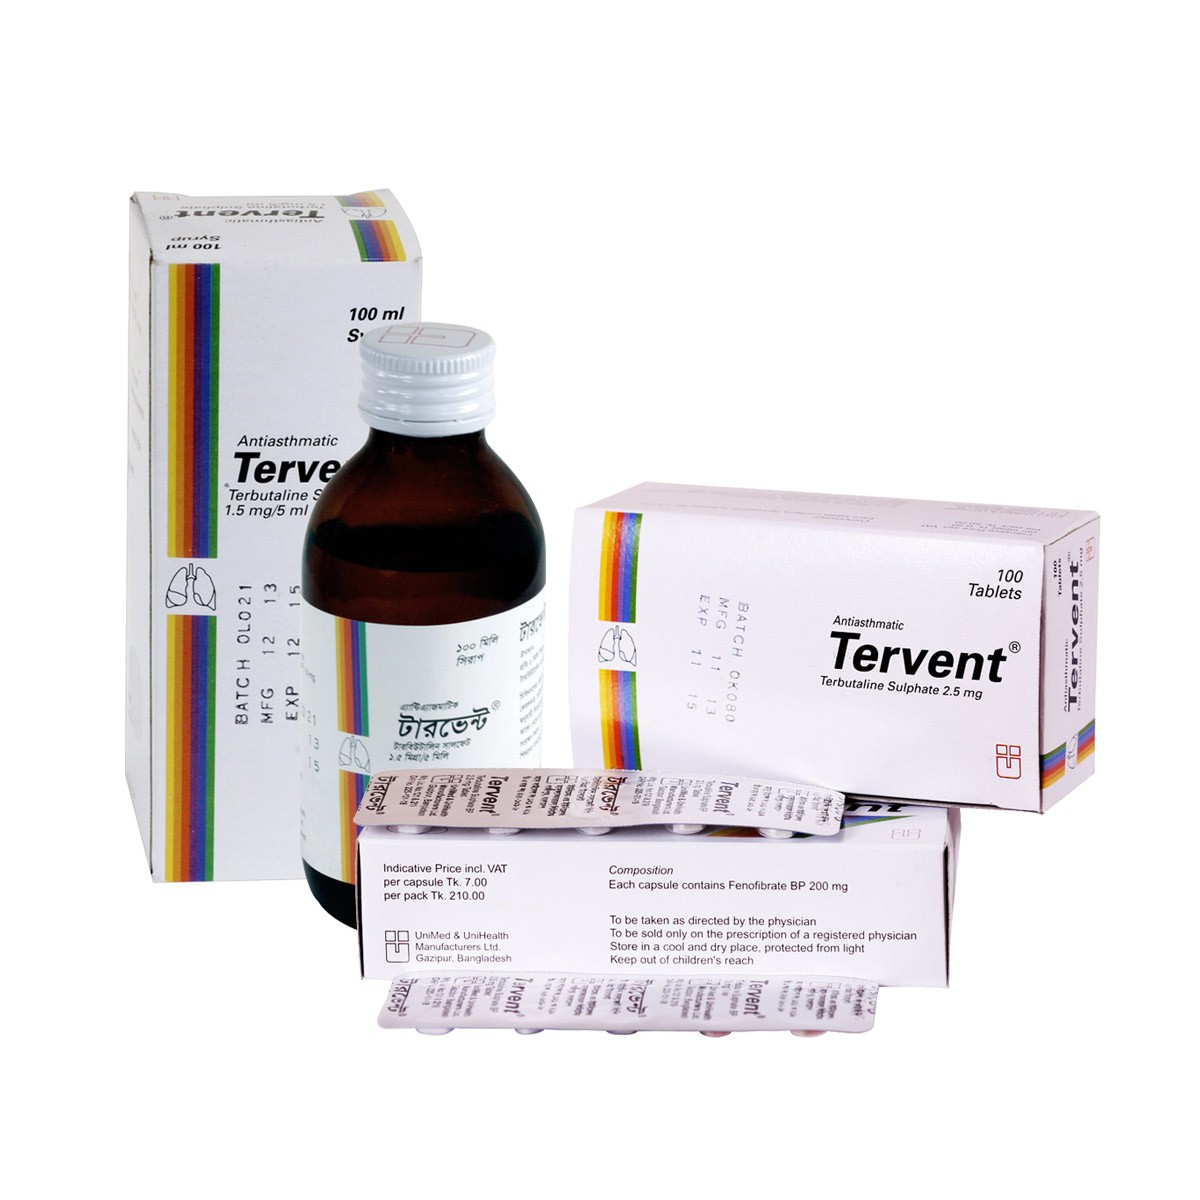 Tervent(1.5 mg/5 ml)